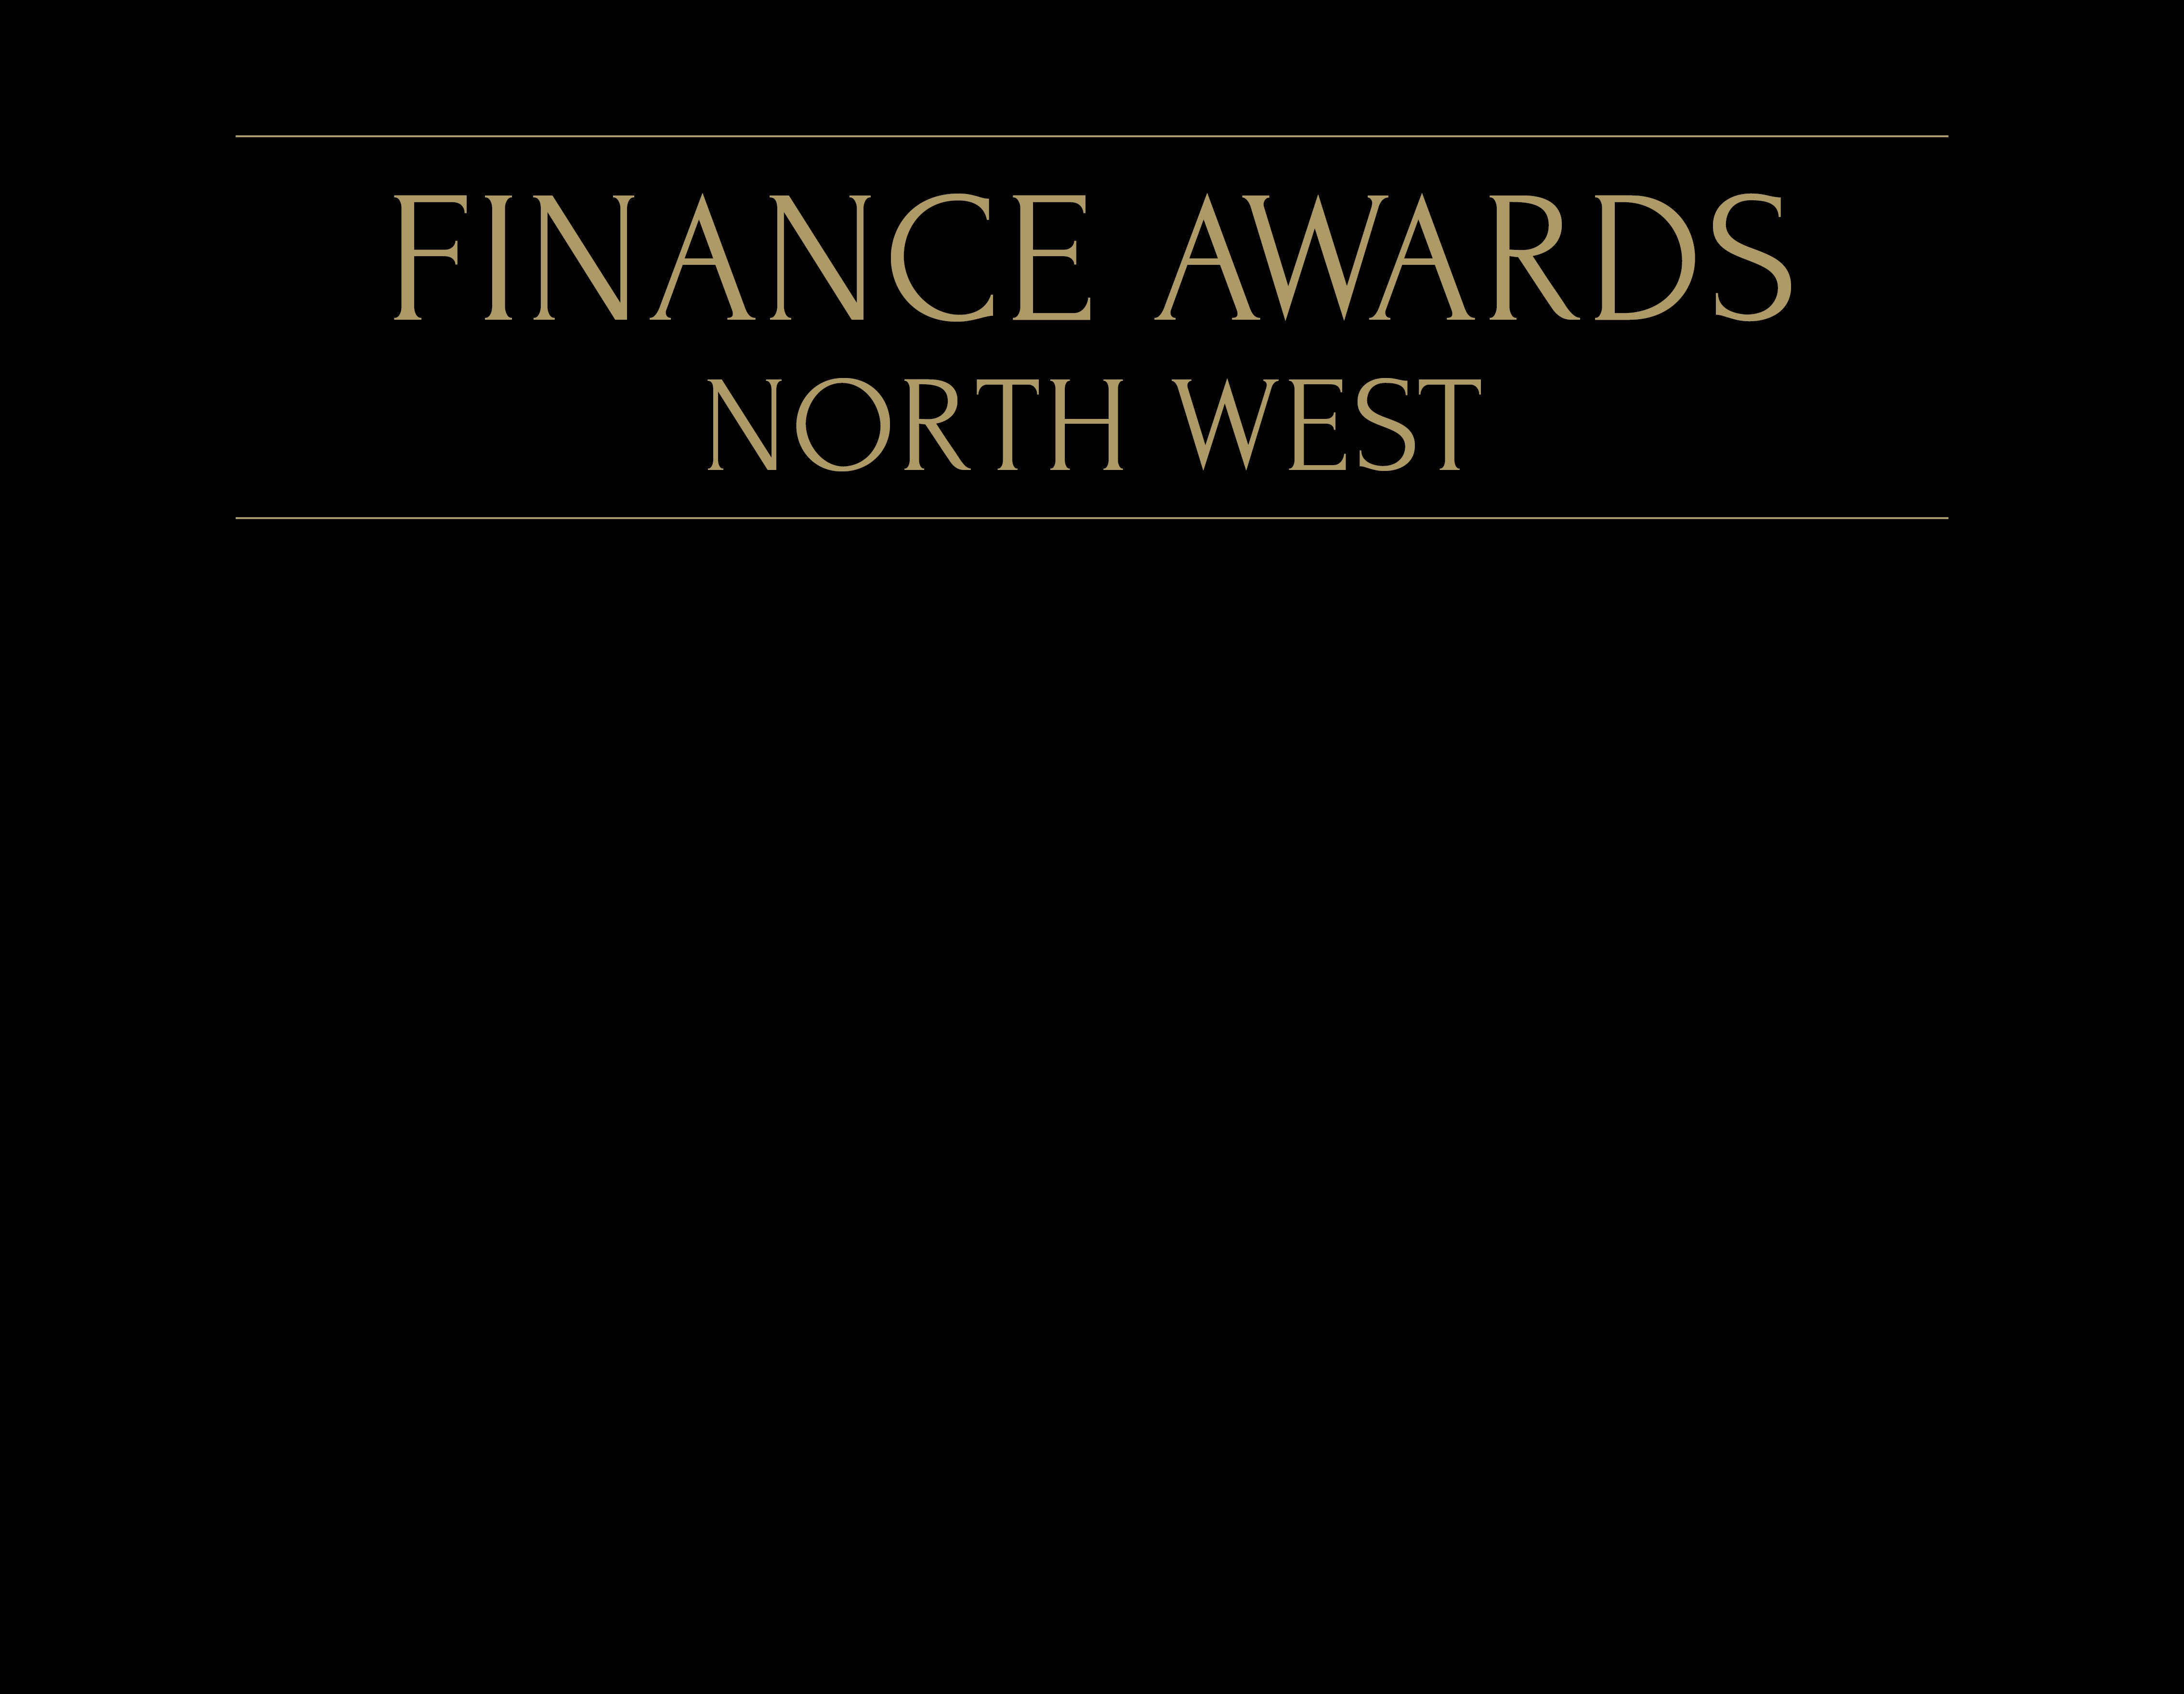 Finance Awards North West logo with black banner